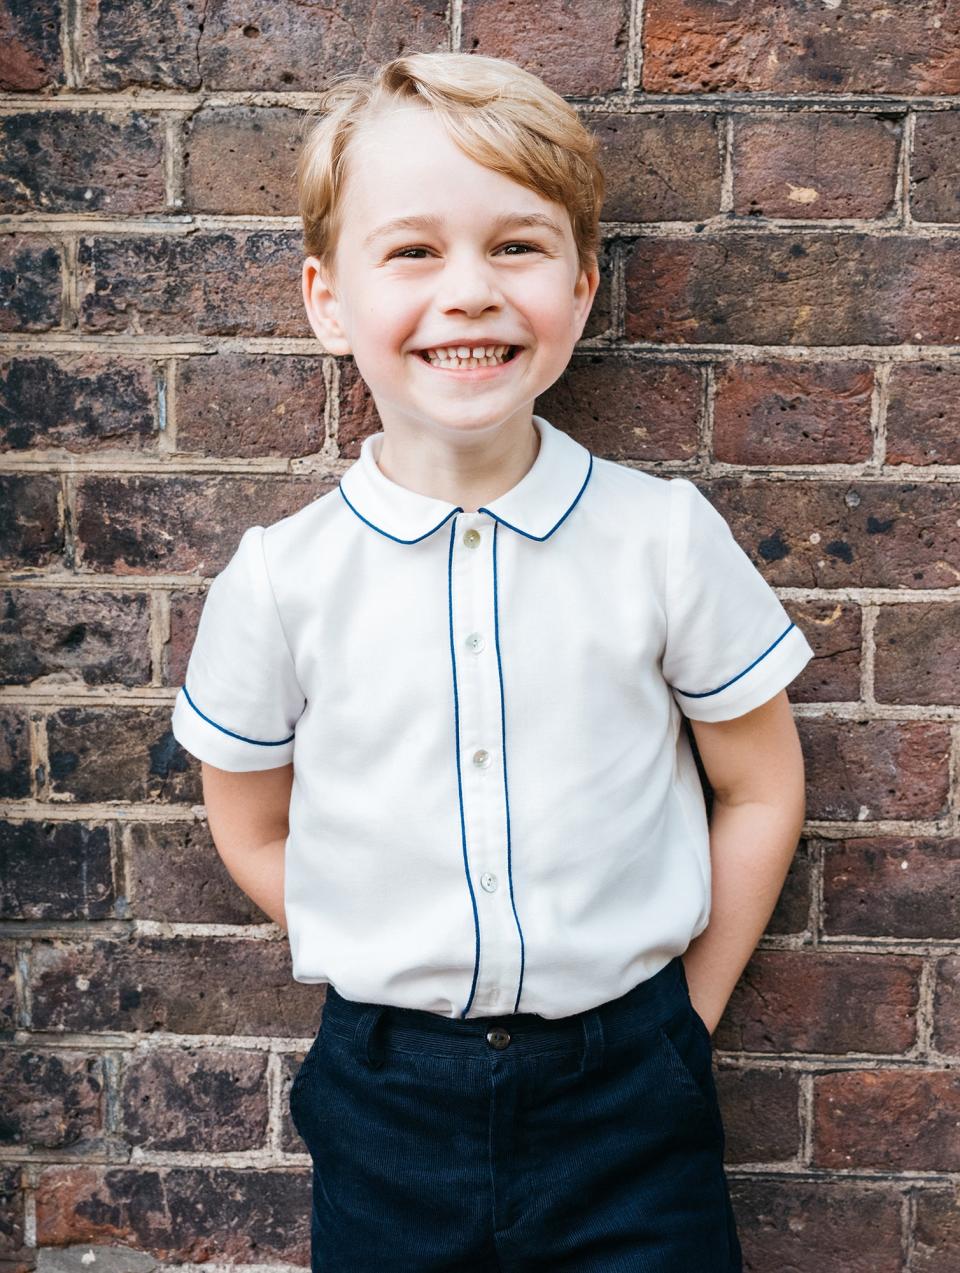 Prince George’s fifth birthday, 2018